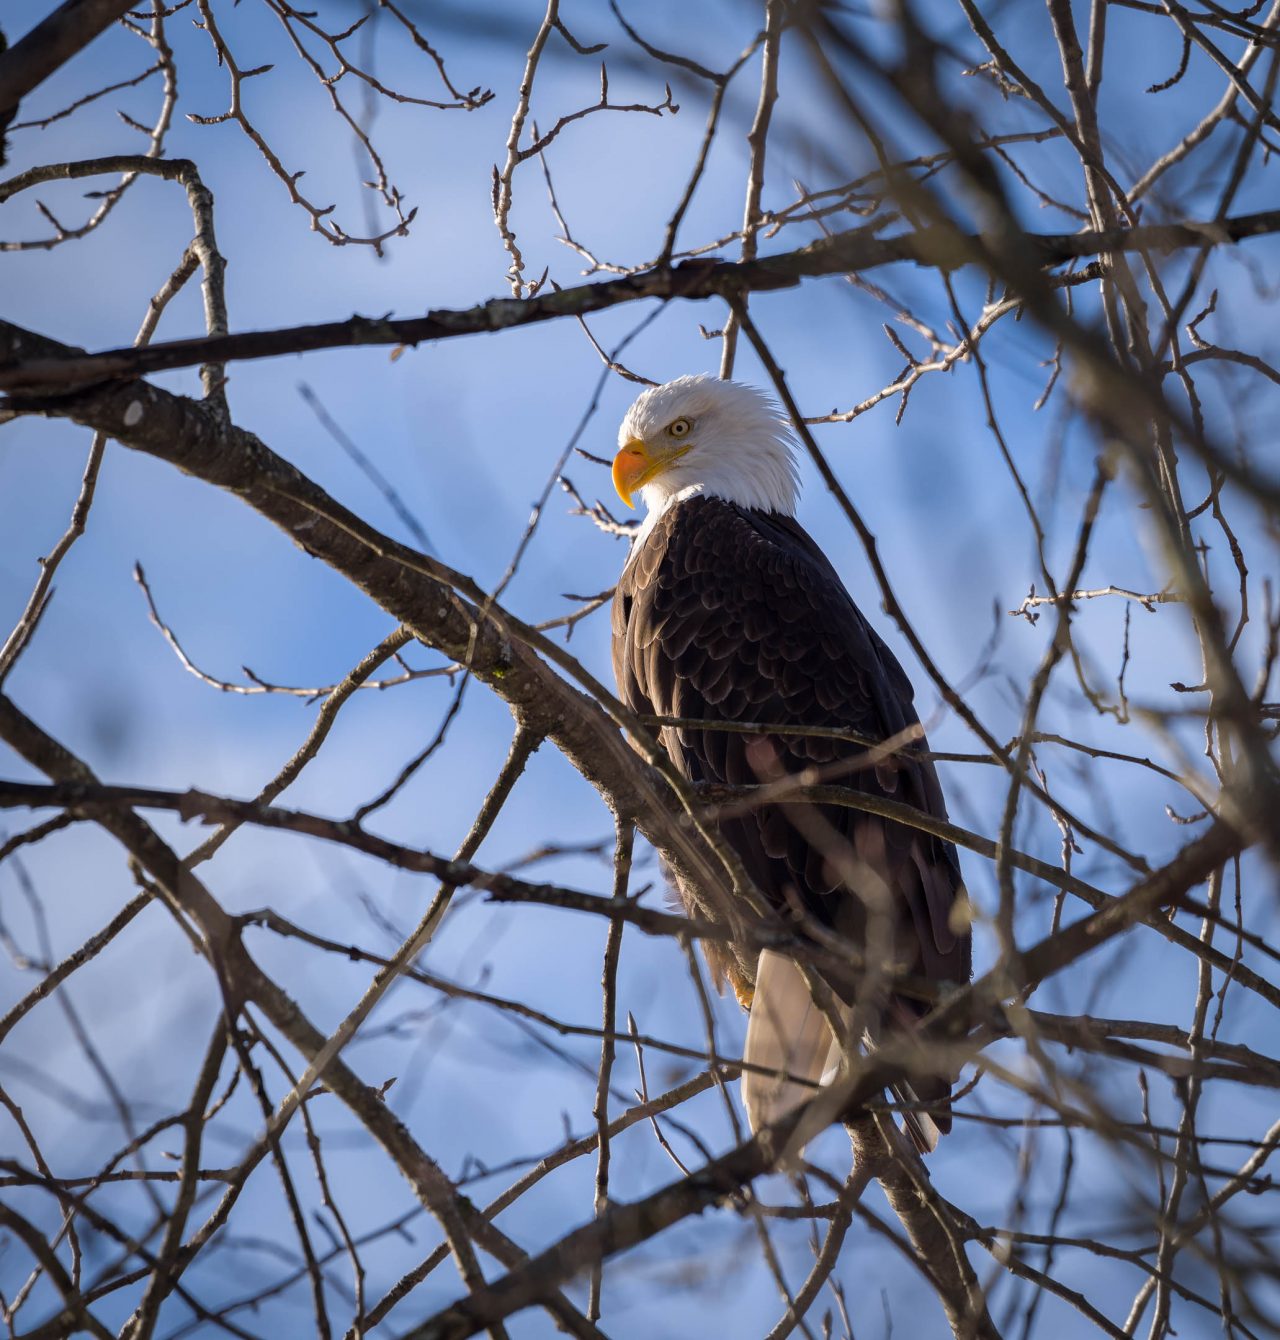 Squamish Bald Eagles : 2016-12-12 : Nikon D810 & Nikkor 200-500 : Eagle in Tree